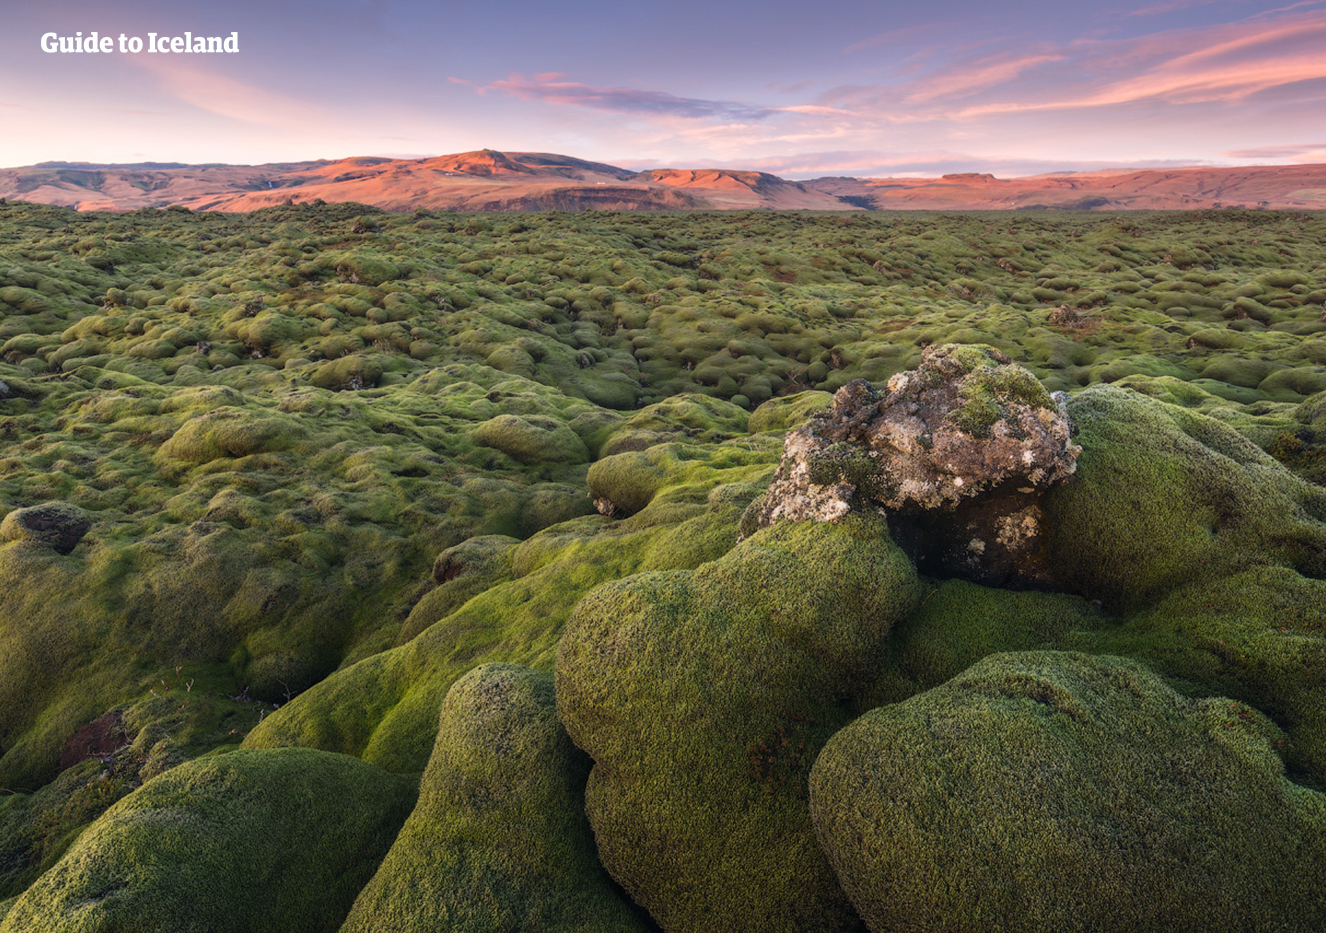 The Eldhraun lava field in the Icelandic highlands